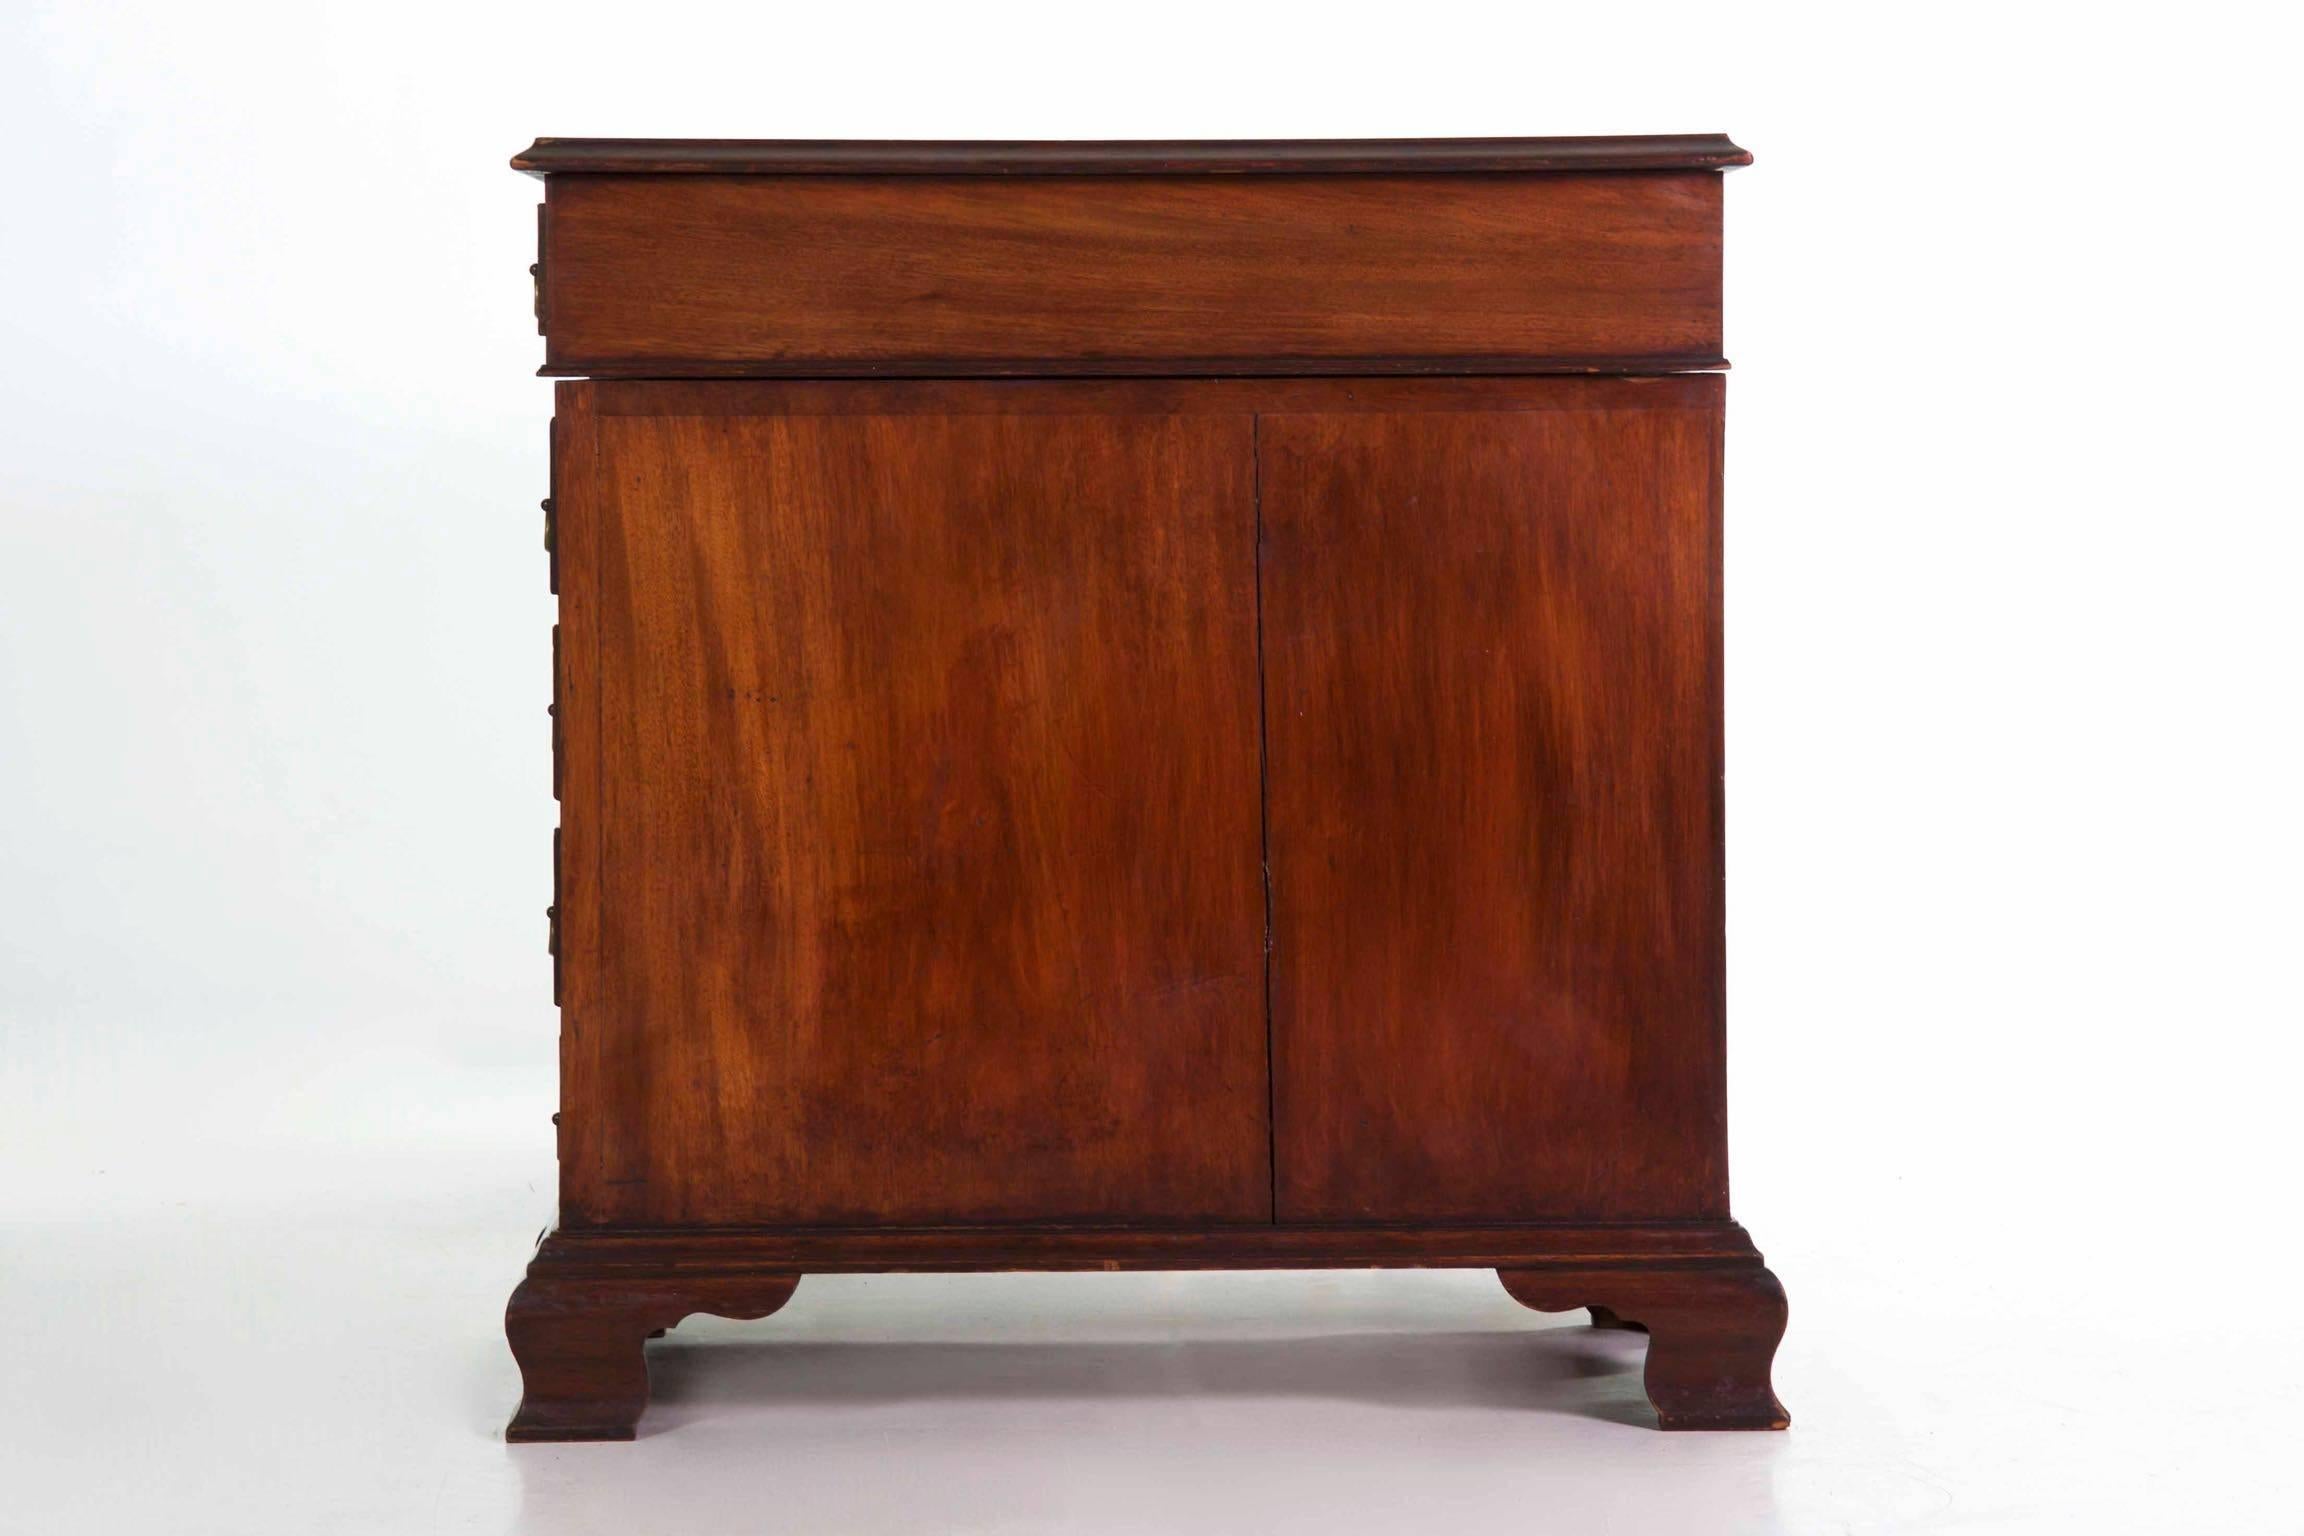 20th Century English George III Style Mahogany and Leather Antique Pedestal Desk (19. Jahrhundert)